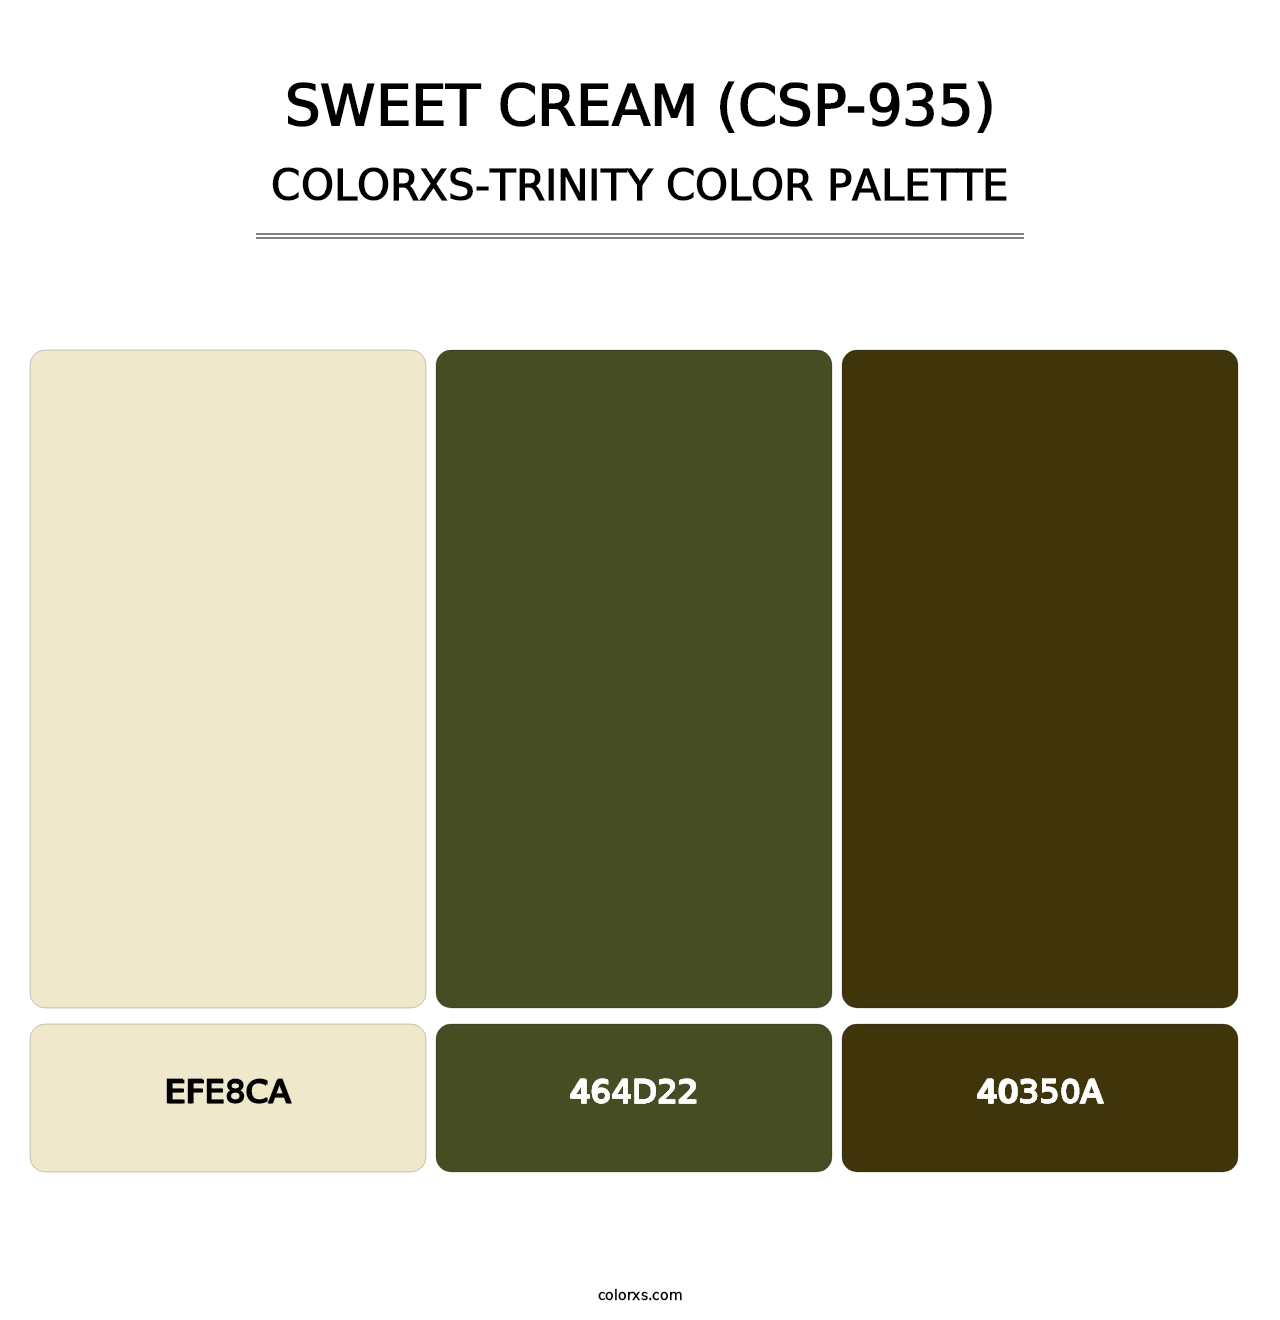 Sweet Cream (CSP-935) - Colorxs Trinity Palette